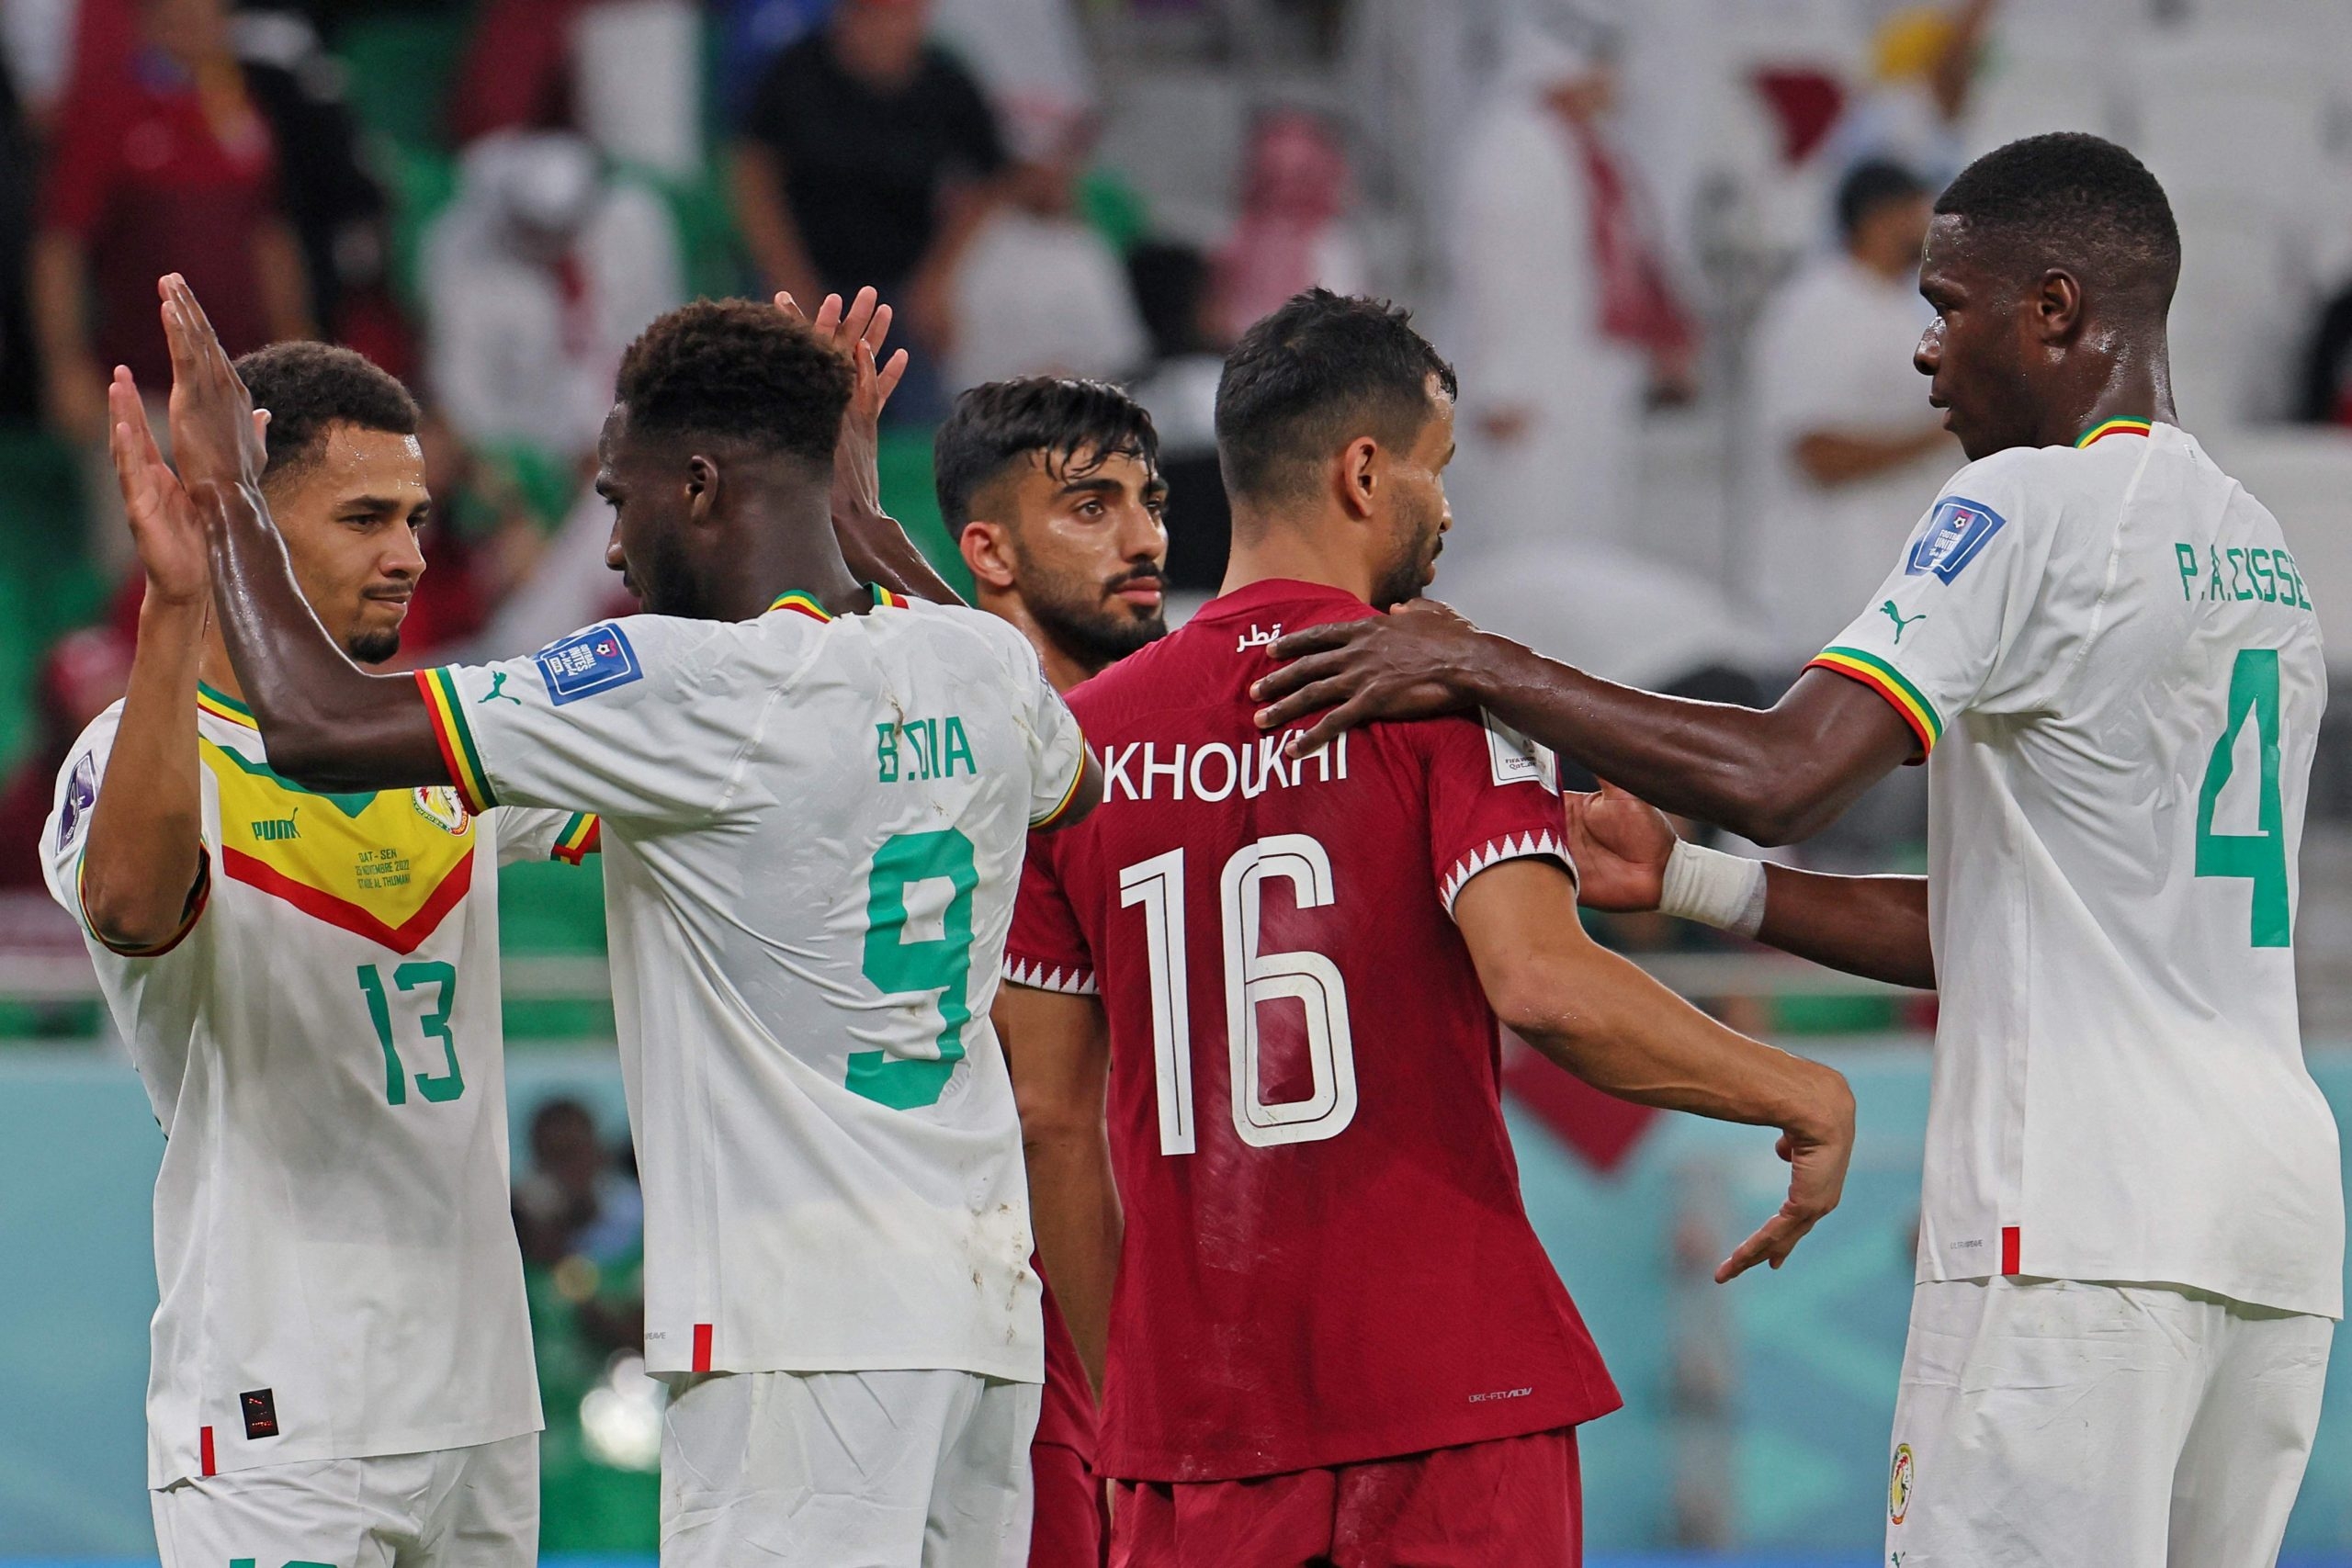 WORLD CUP NOTES: Host Qatar